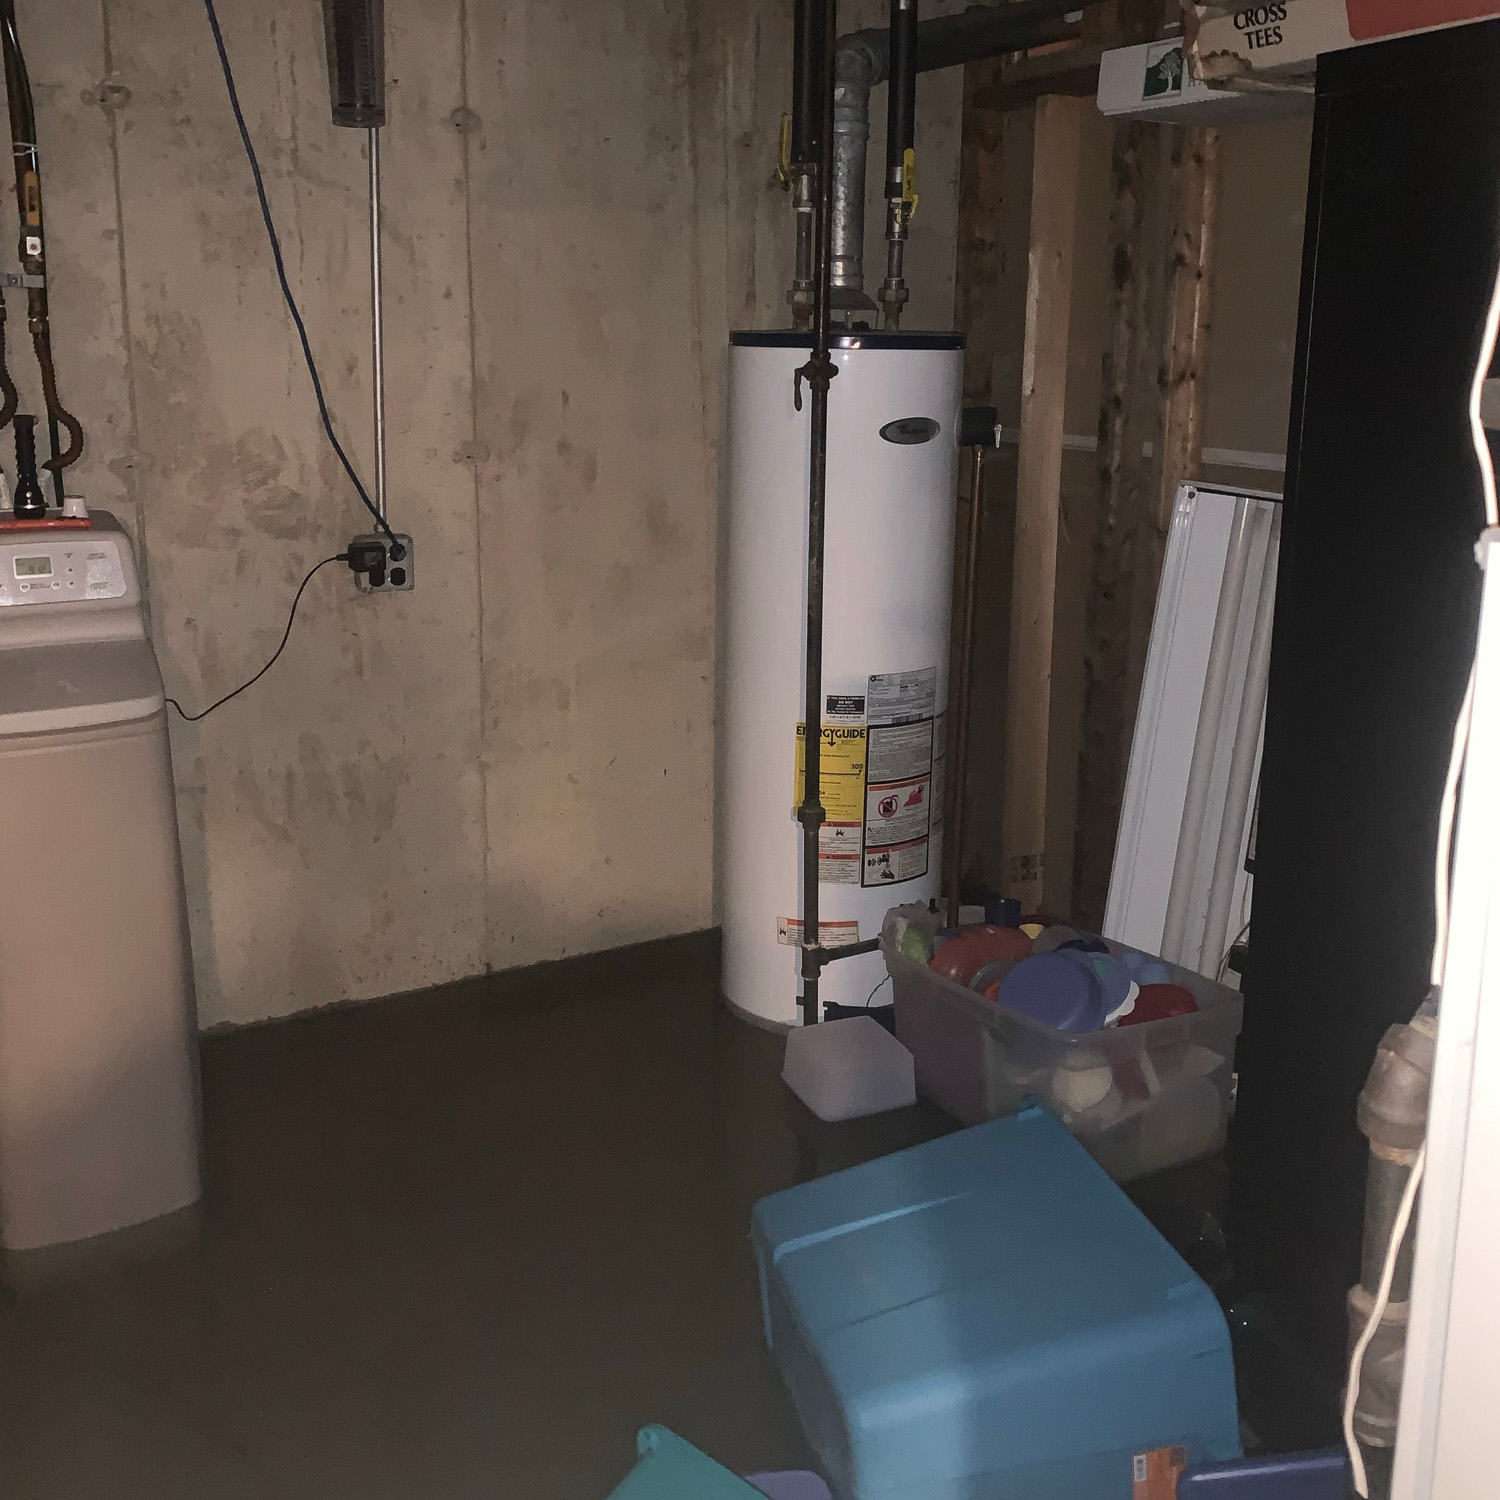 flooded basement. standing water in basement around water heater.